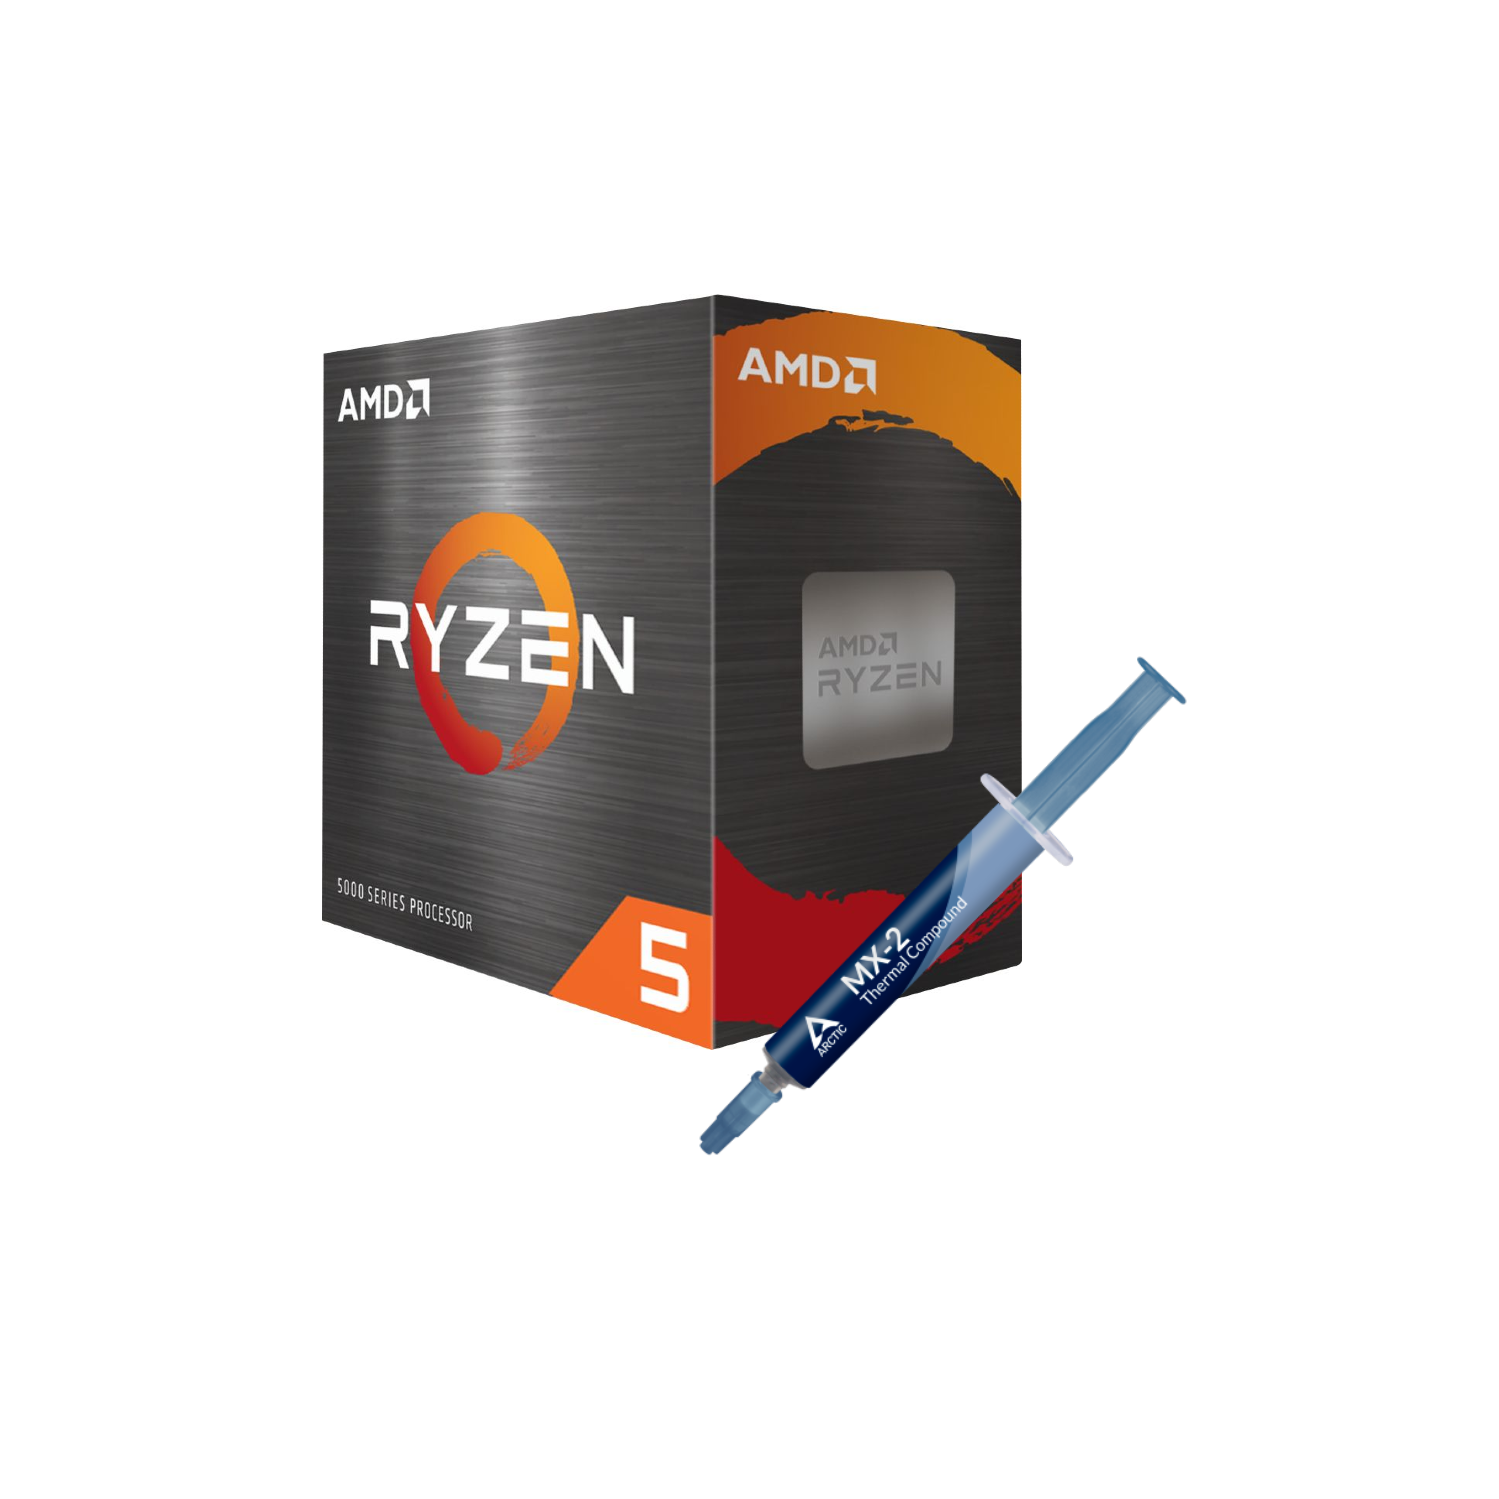 AMD Ryzen 5 5600X 4th Gen 6-core 12-threads Unlocked Desktop Processor w/ Wraith Stealth Cooler & Arctic MX-2 Thermal Compound